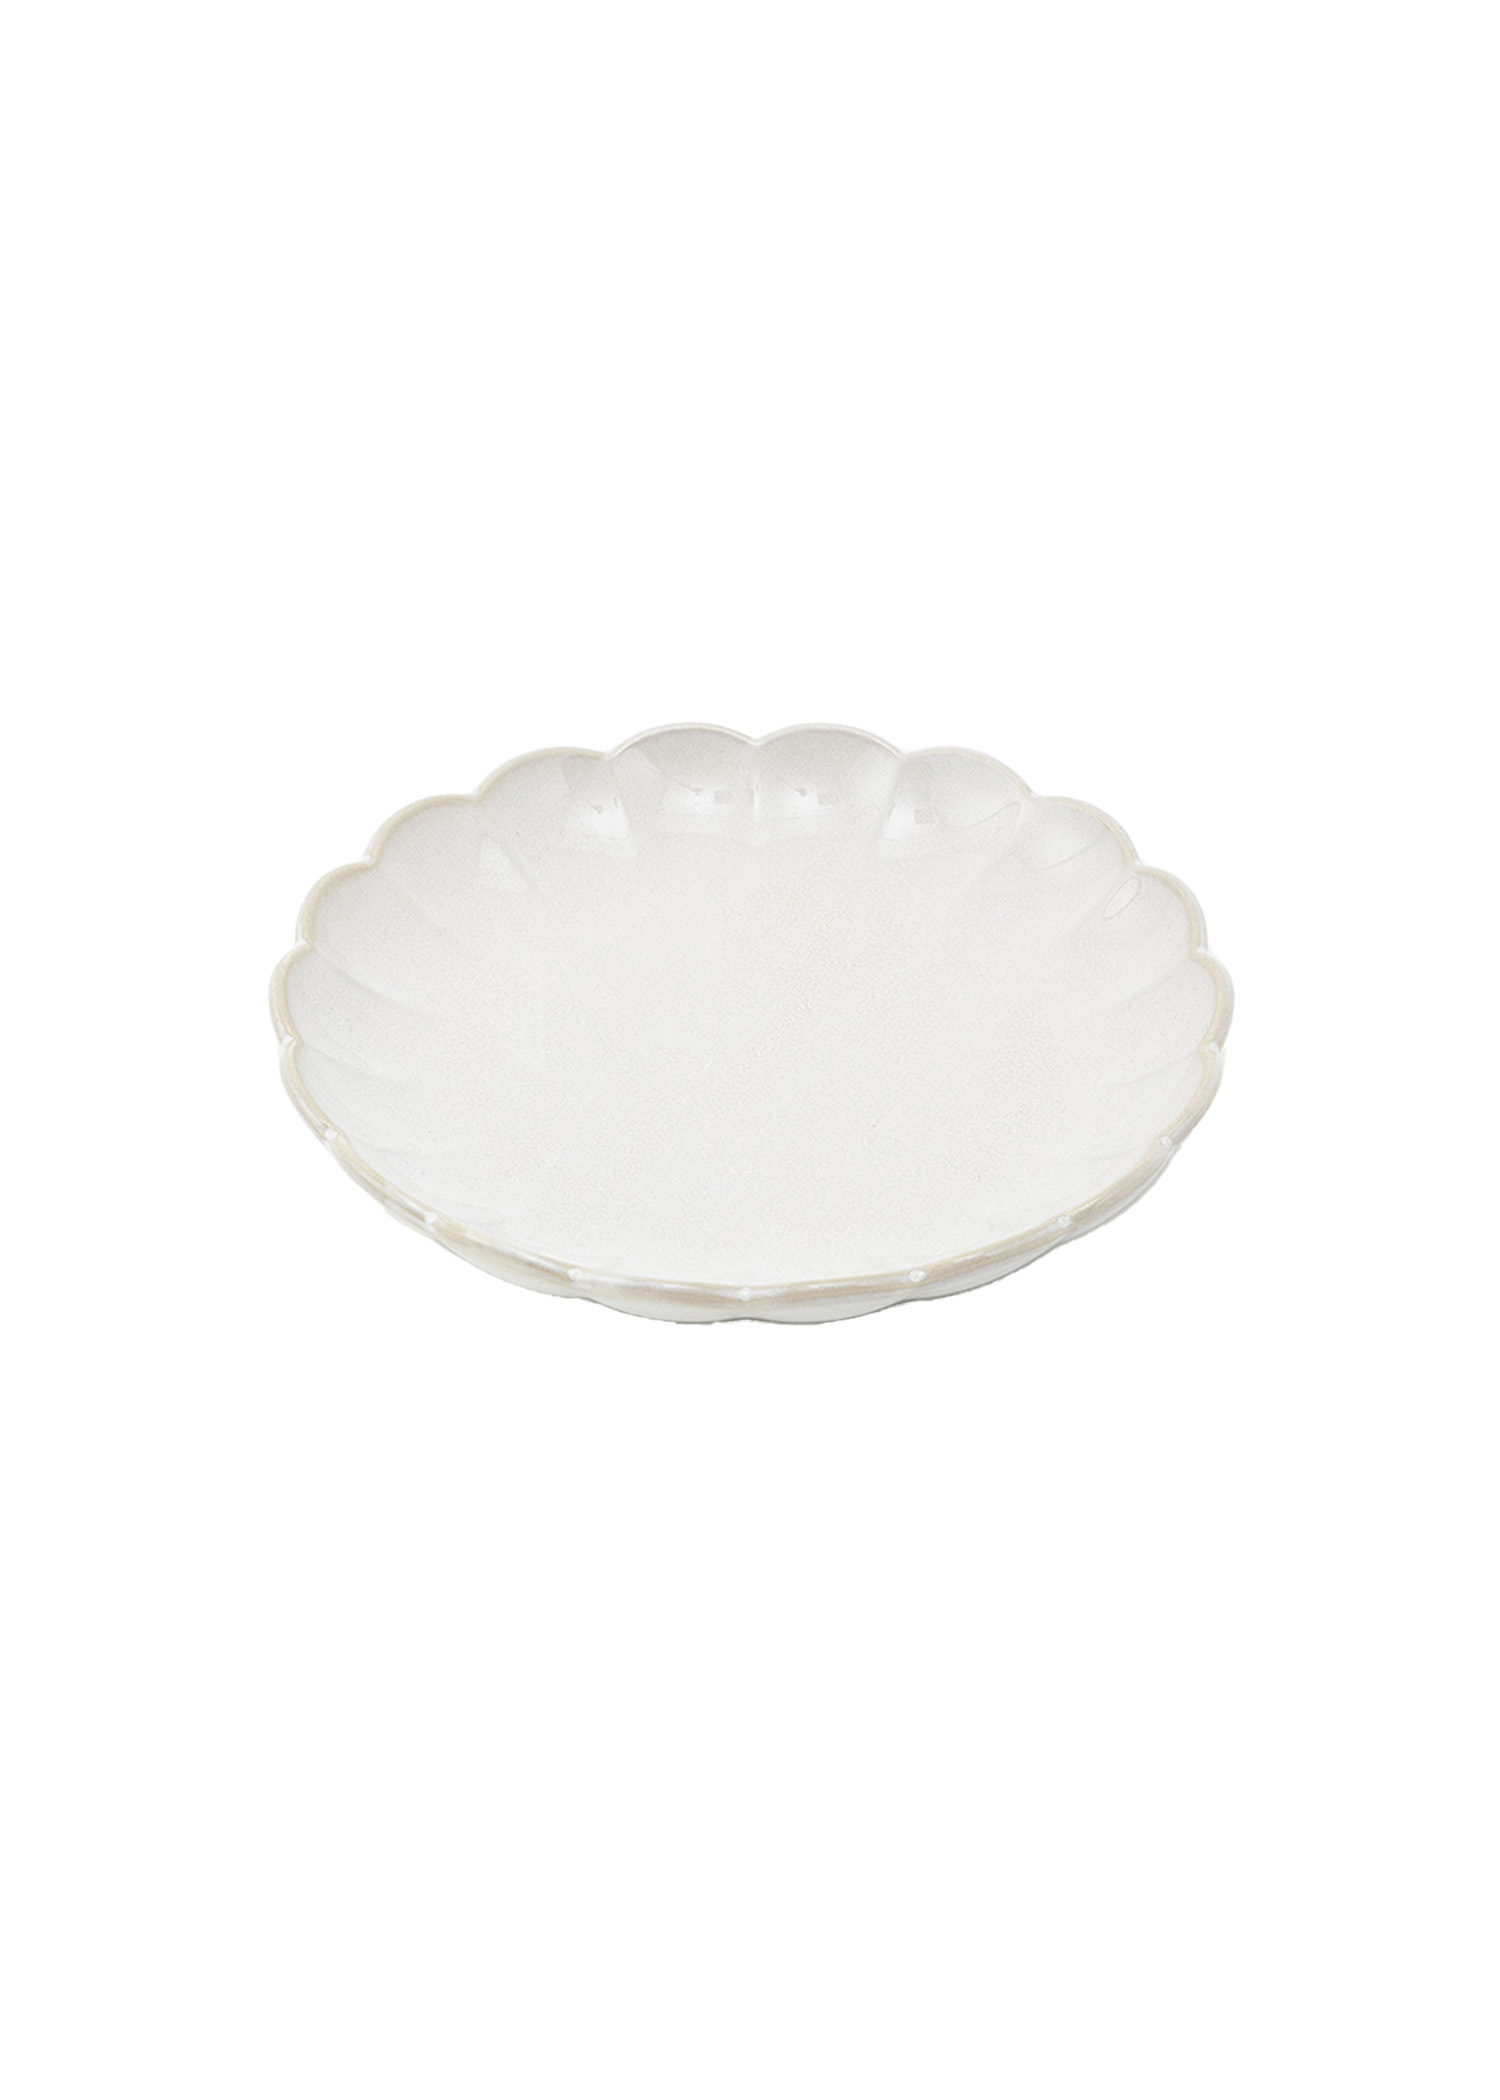 White stoneware side plate Image 0